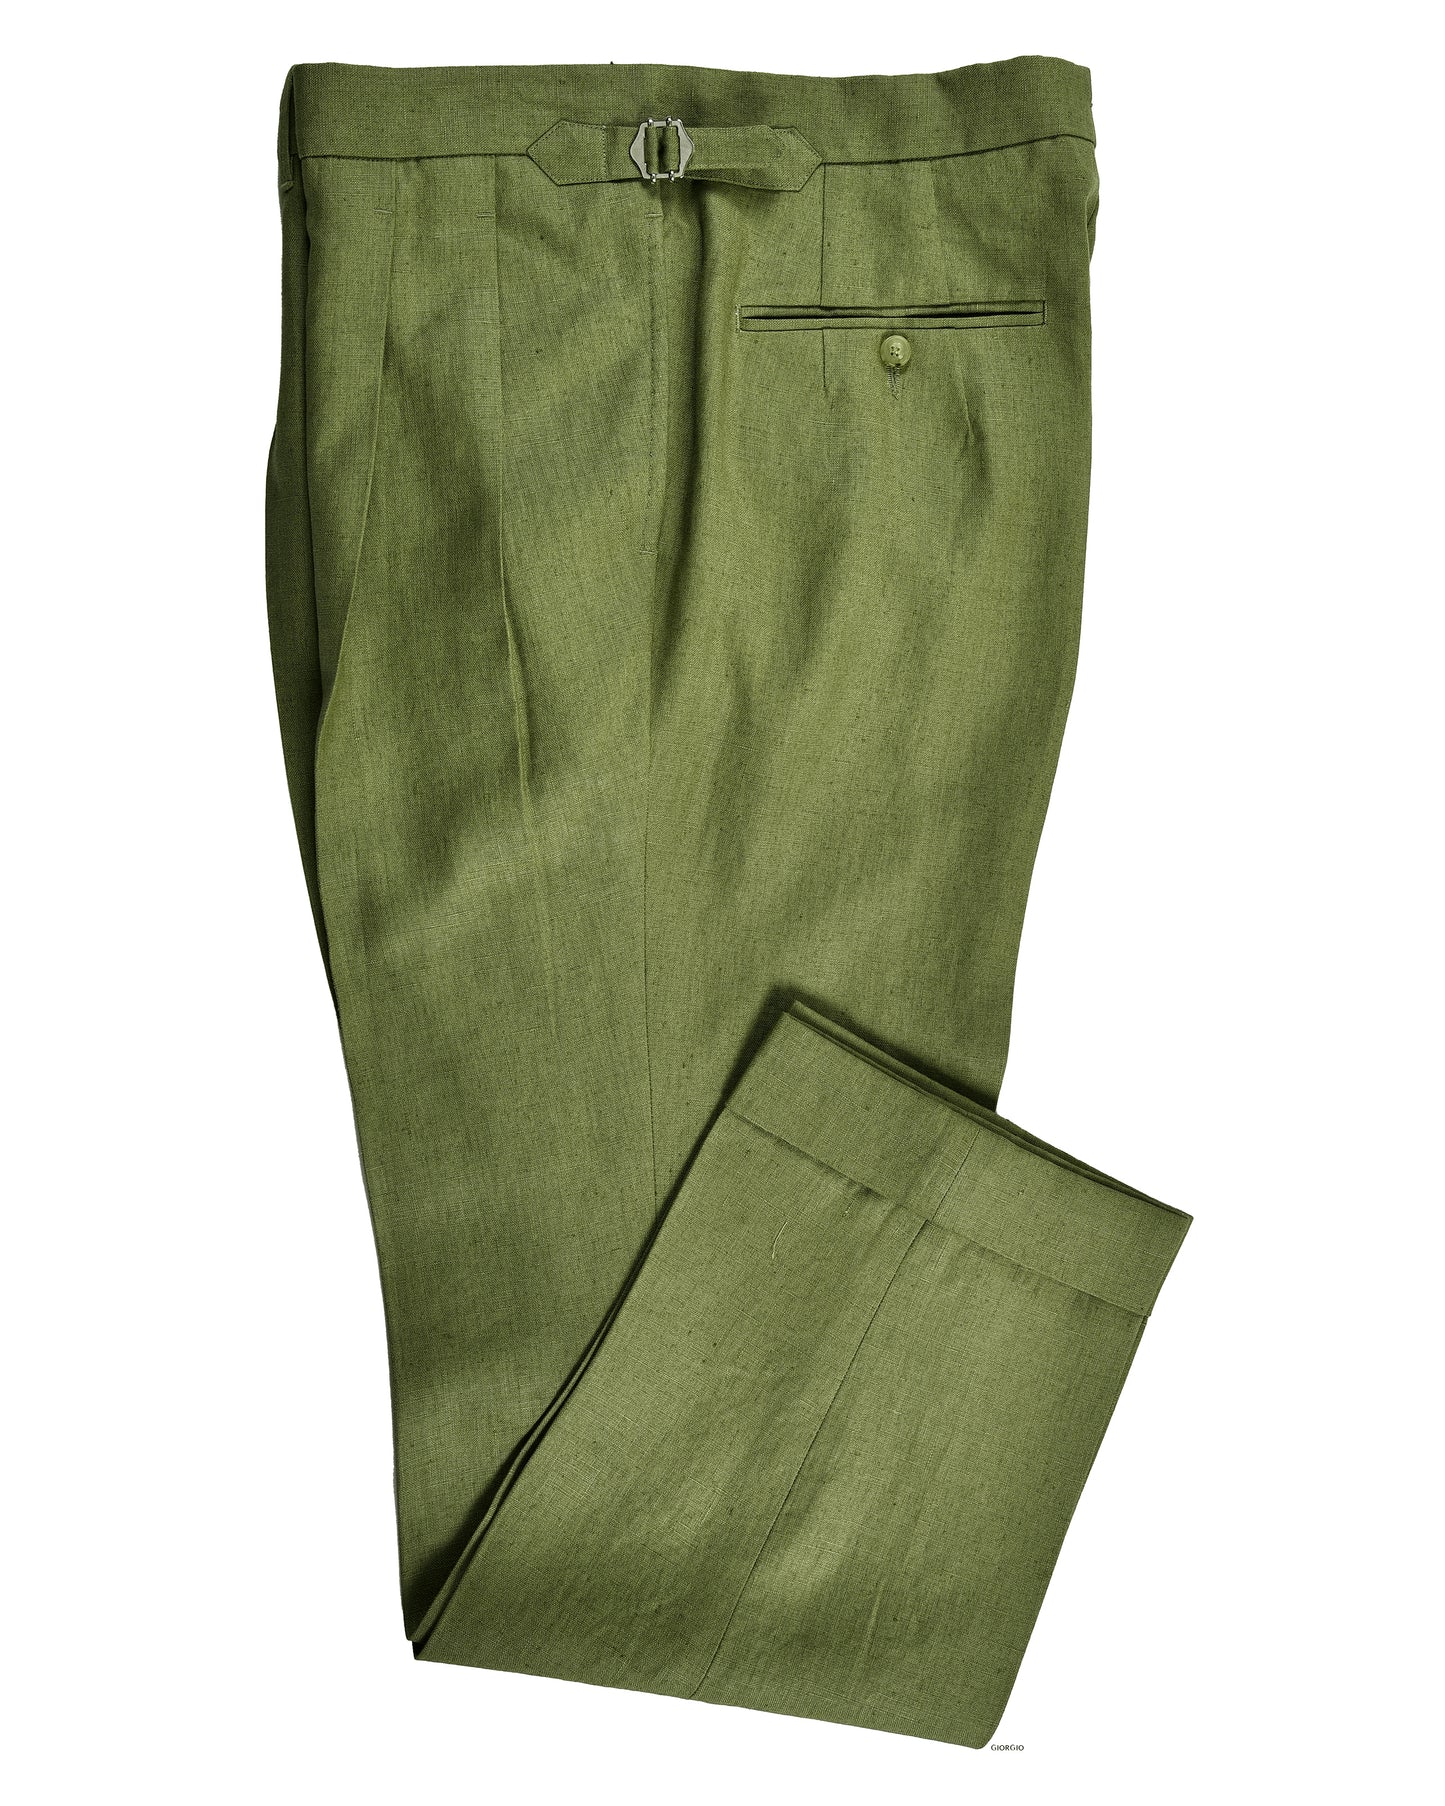 Pleated Fern Green Linen Dress Pant